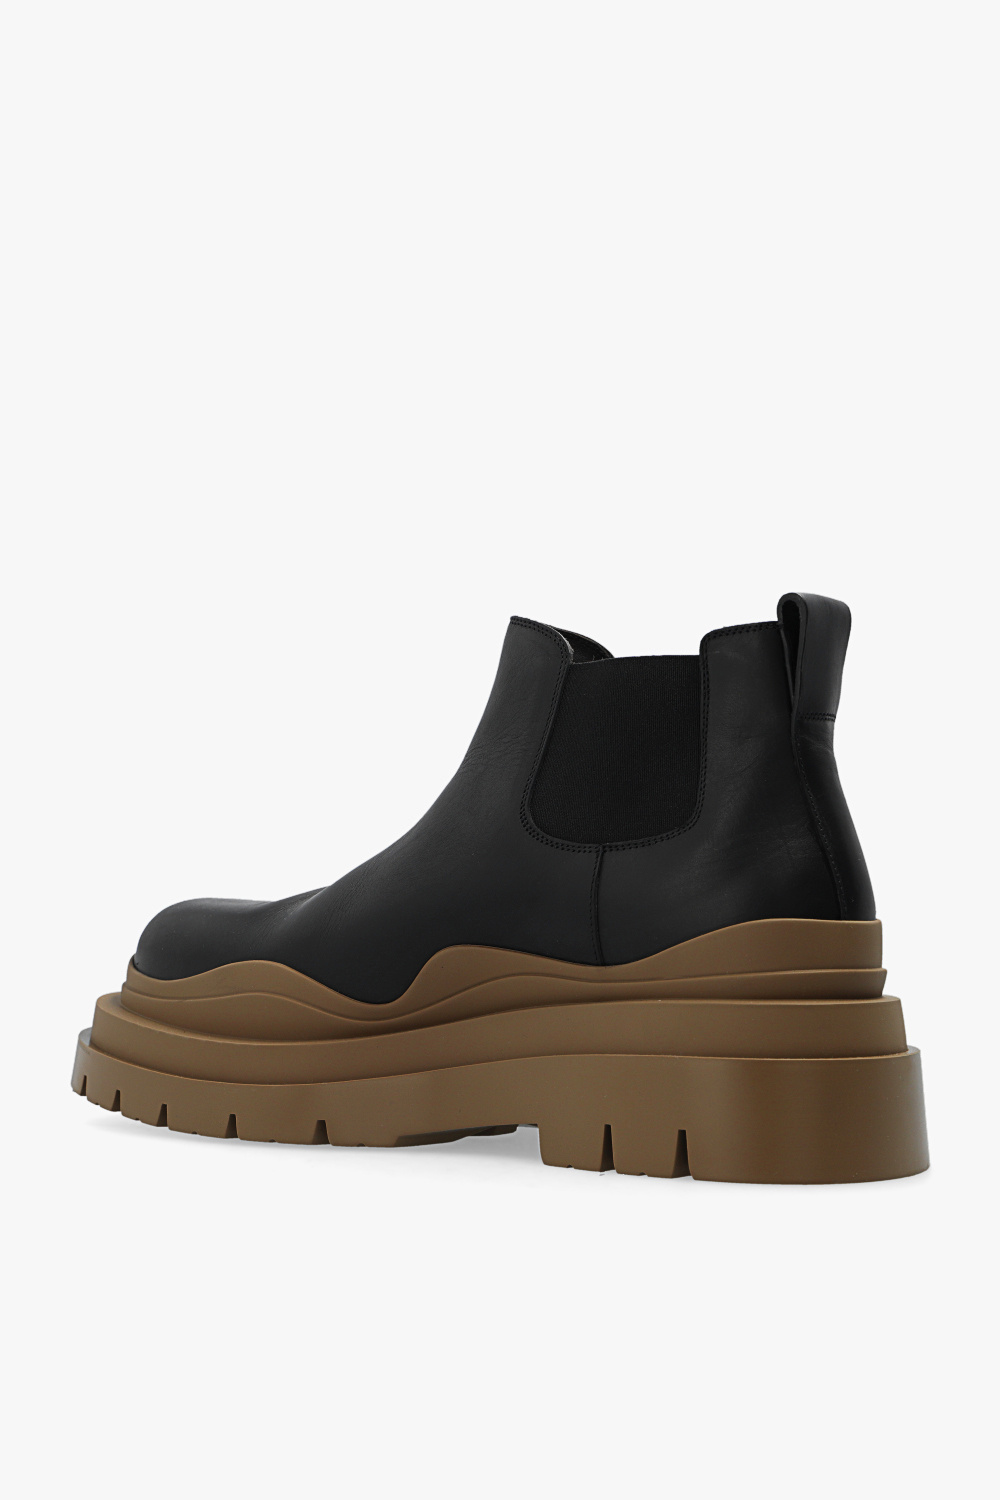 bottega pouch Veneta ‘Tire’ leather Chelsea boots